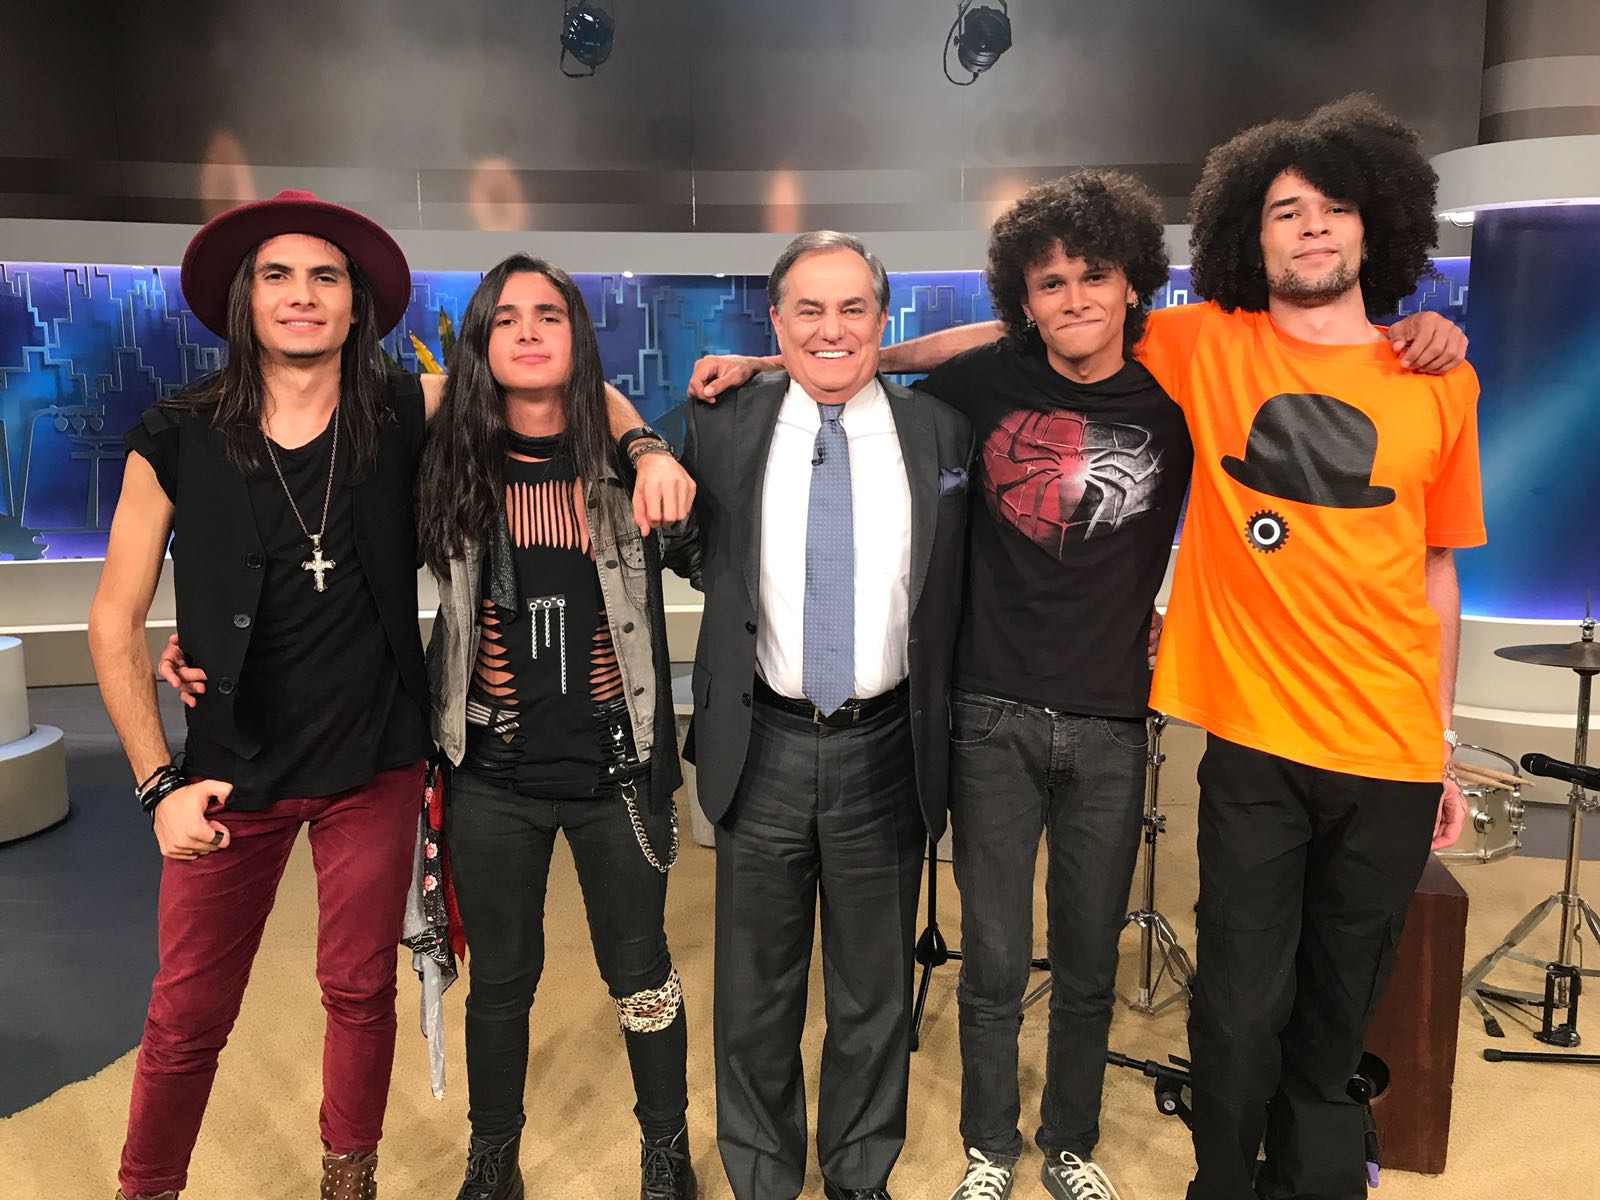 Banda de Rock In Roll vem conquistando grandes fãs no Brasil